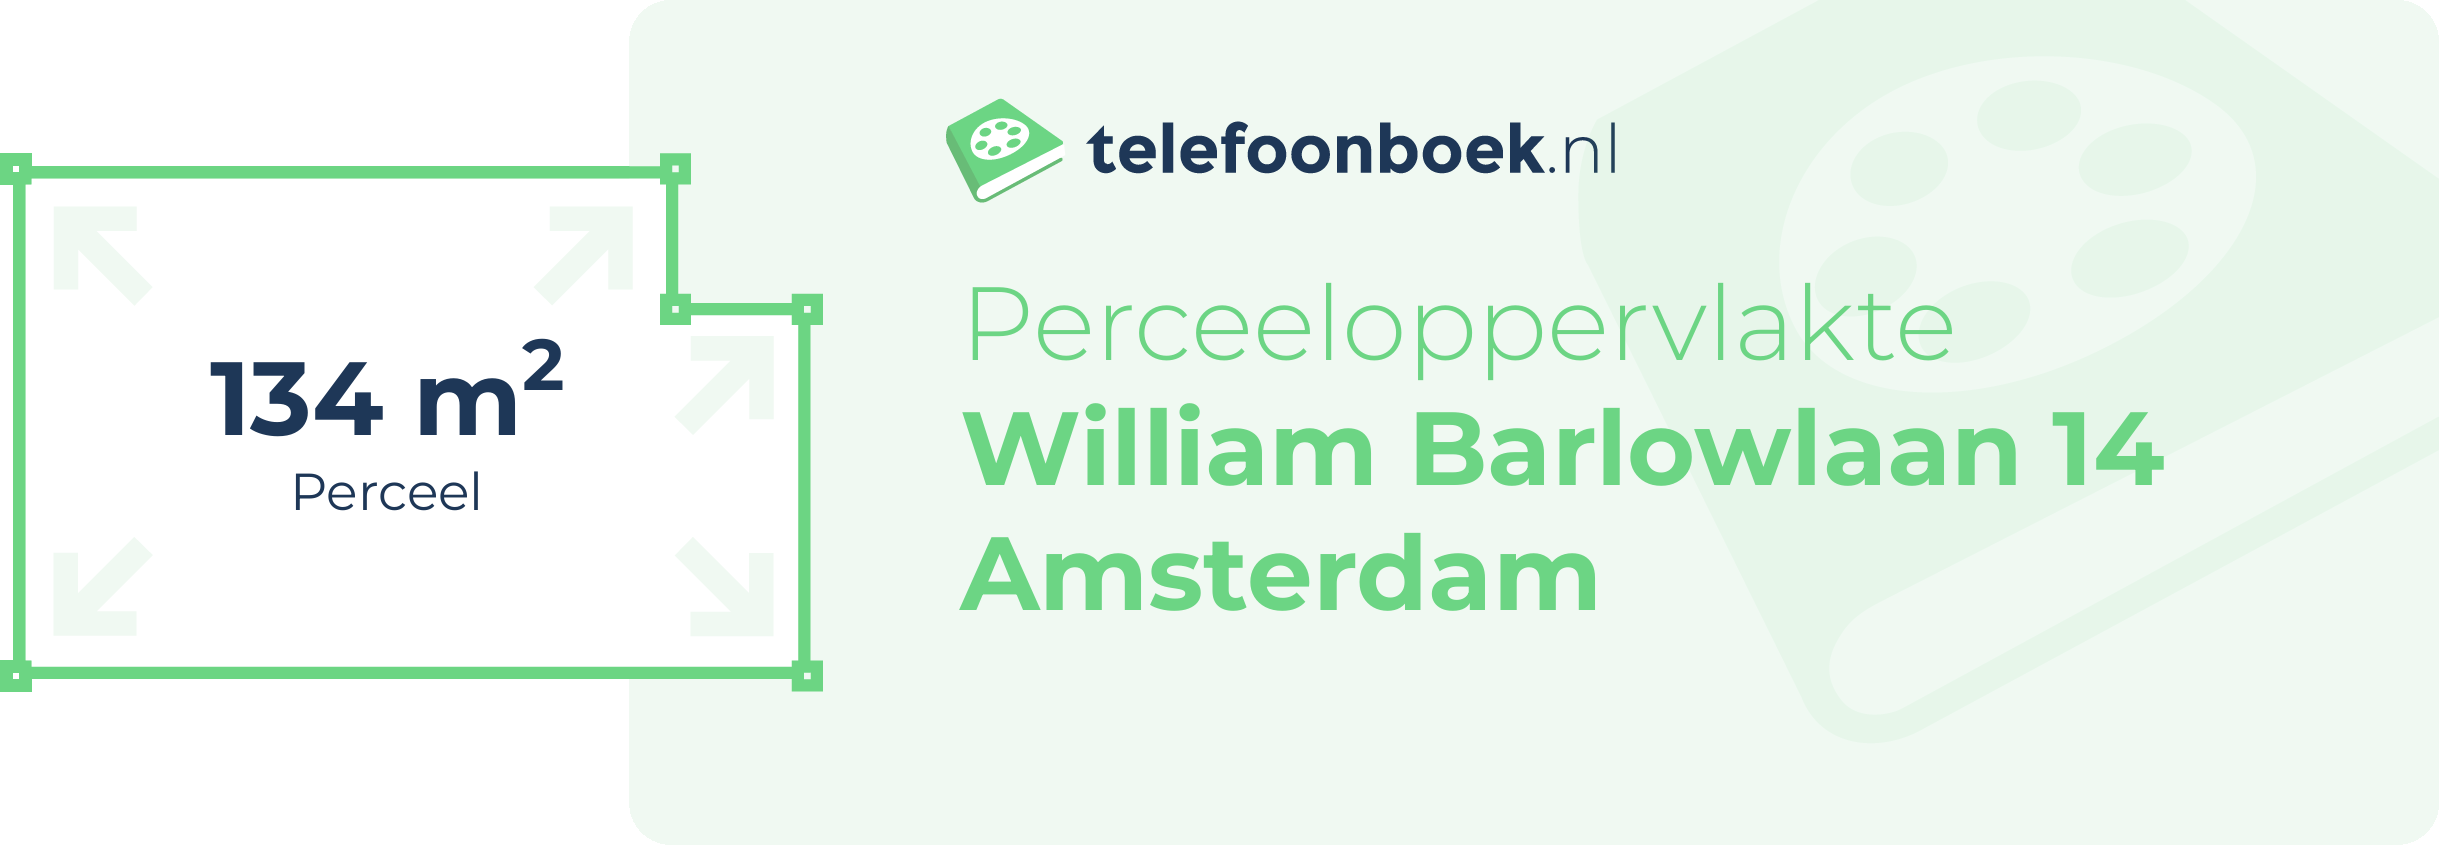 Perceeloppervlakte William Barlowlaan 14 Amsterdam